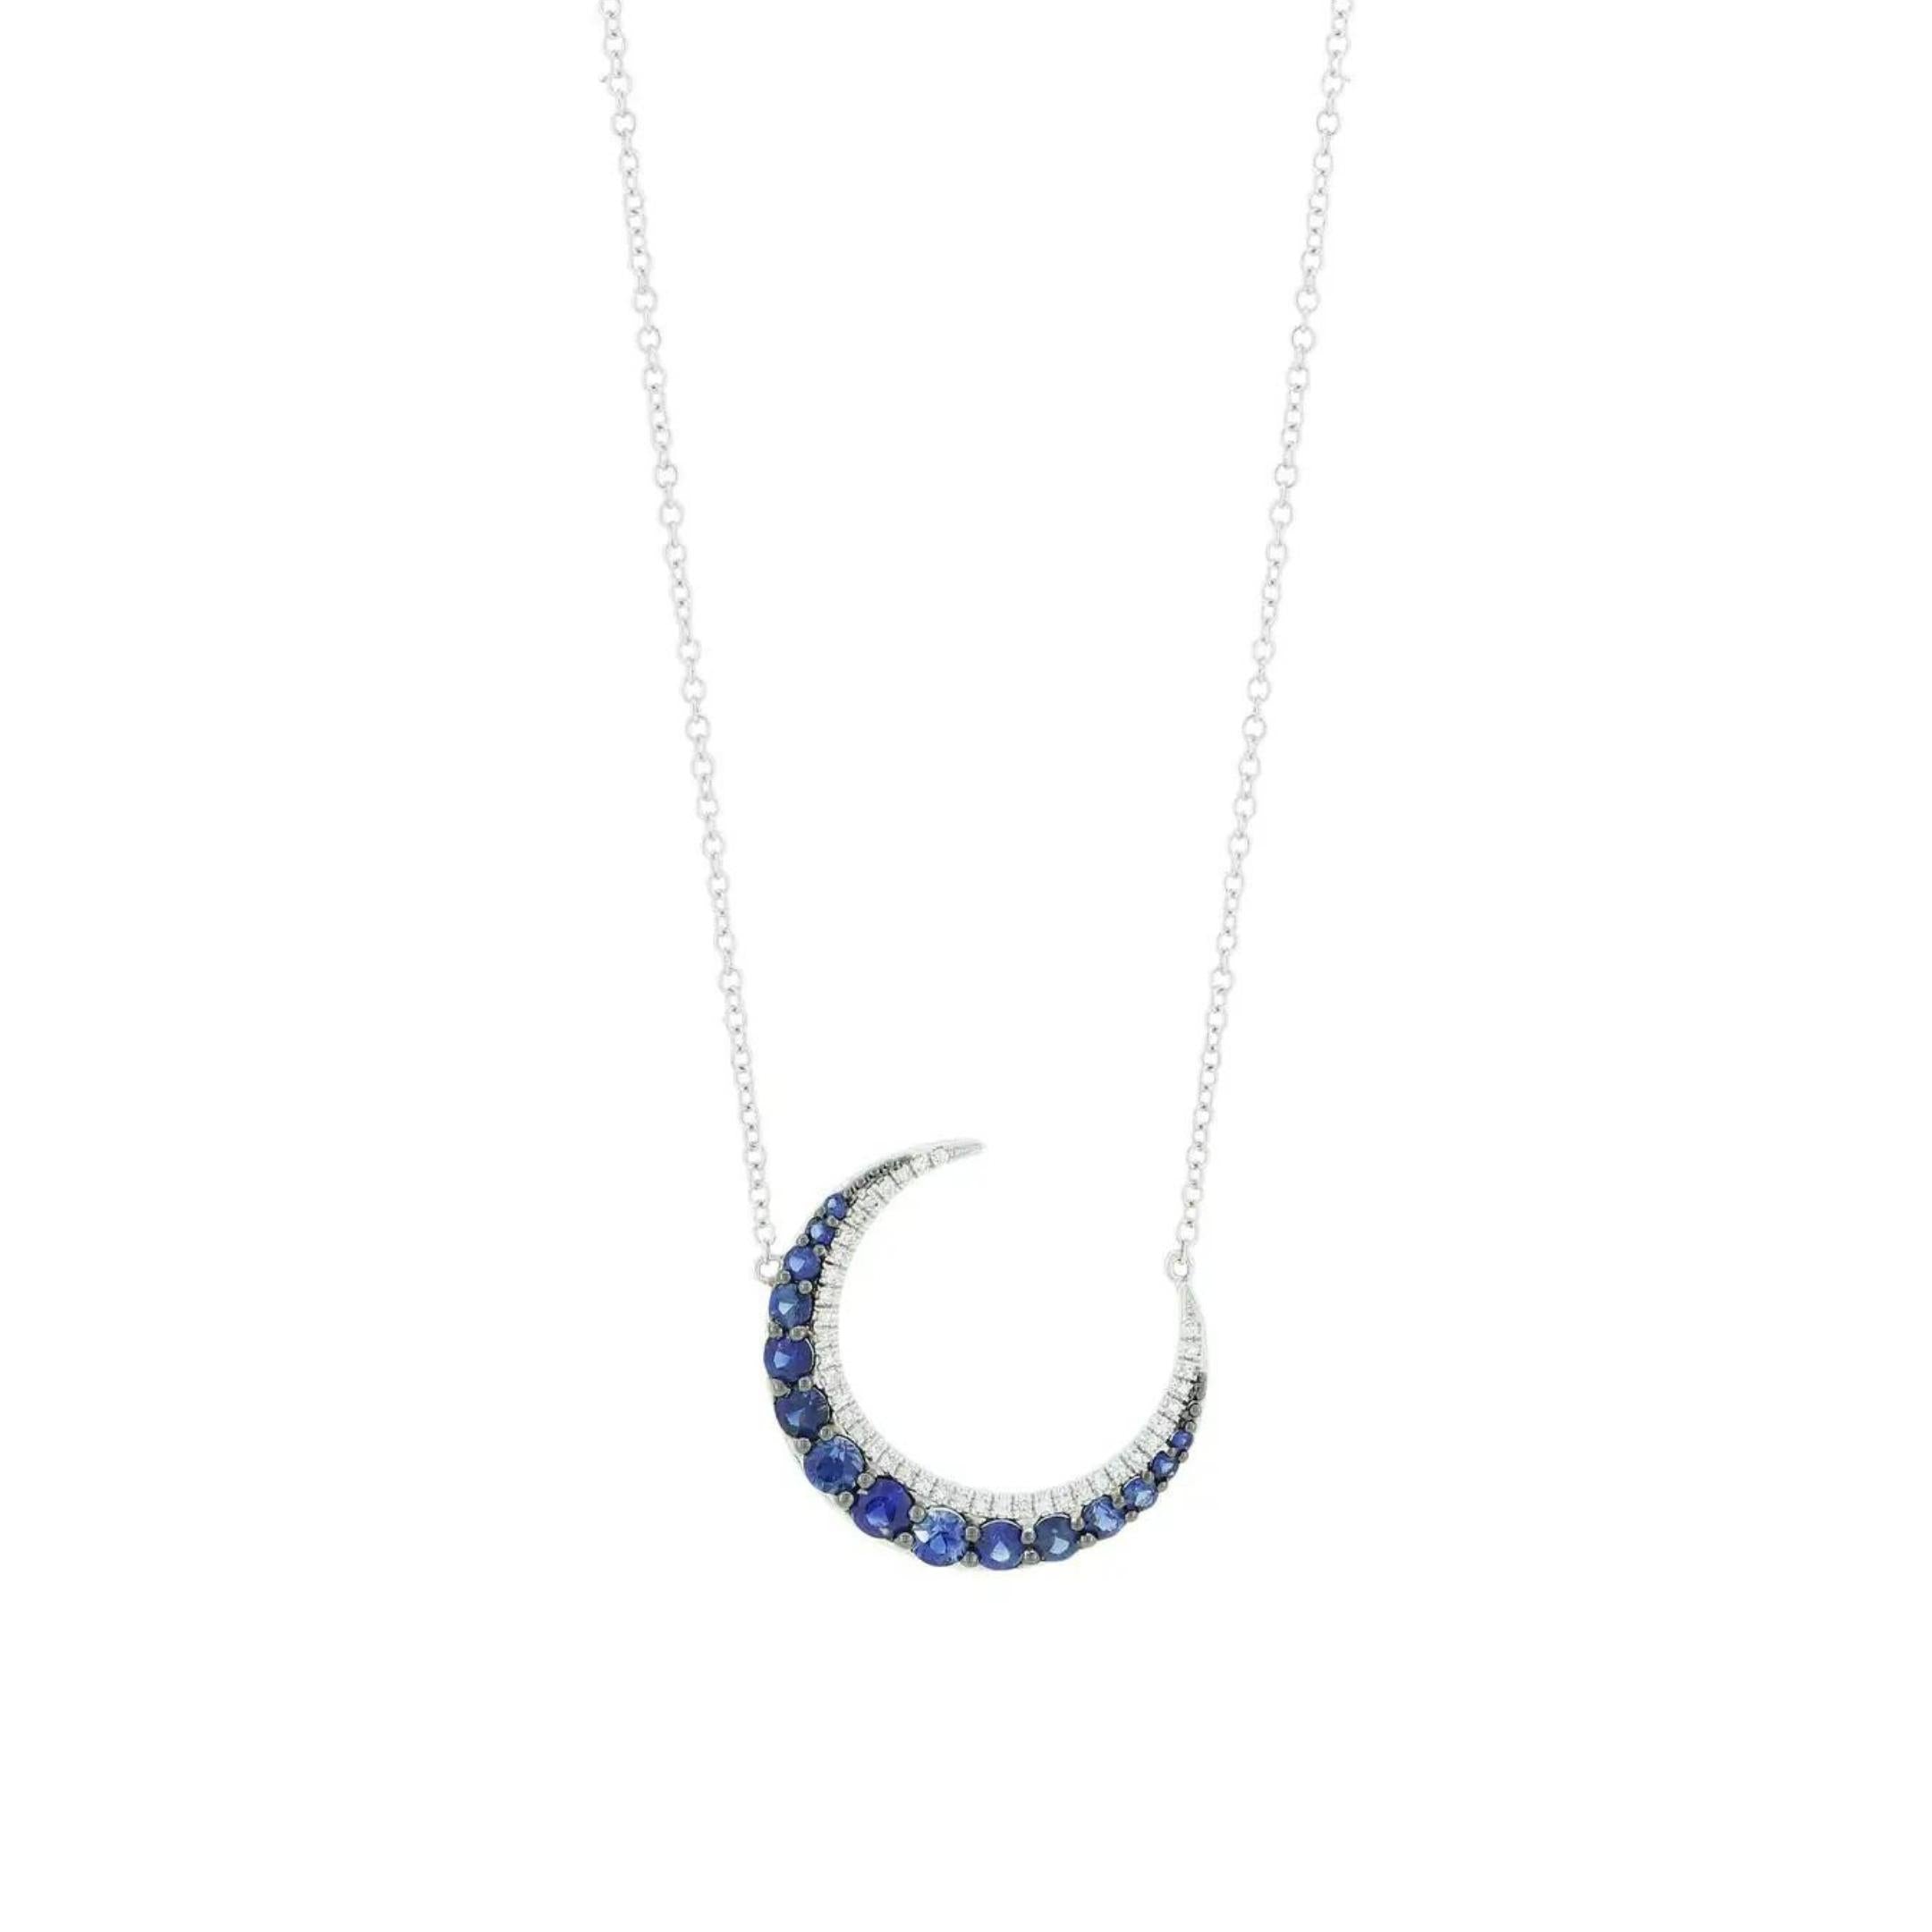 Blue Crescent Necklace in 92.5 Silver - Amrrutam